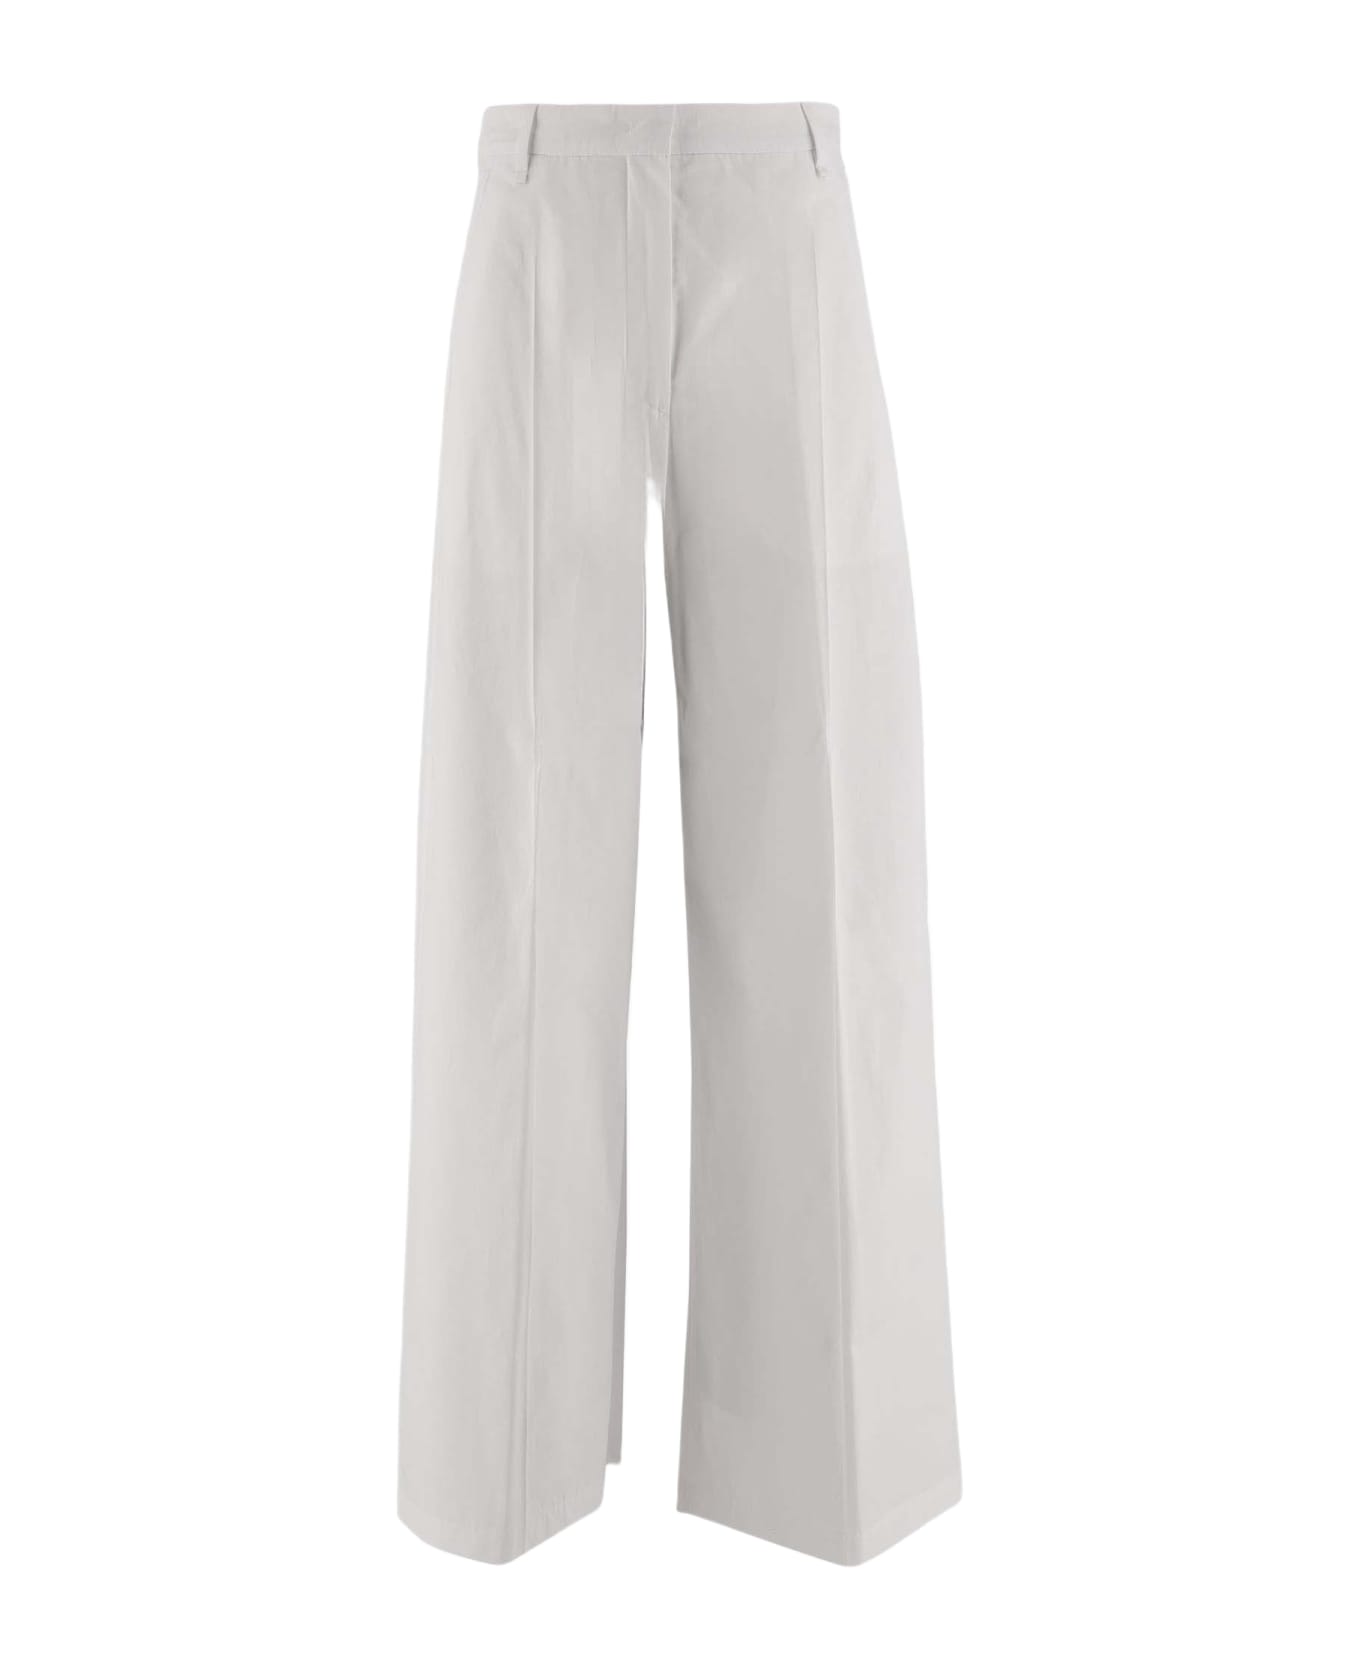 SportMax Cotton Pants - White